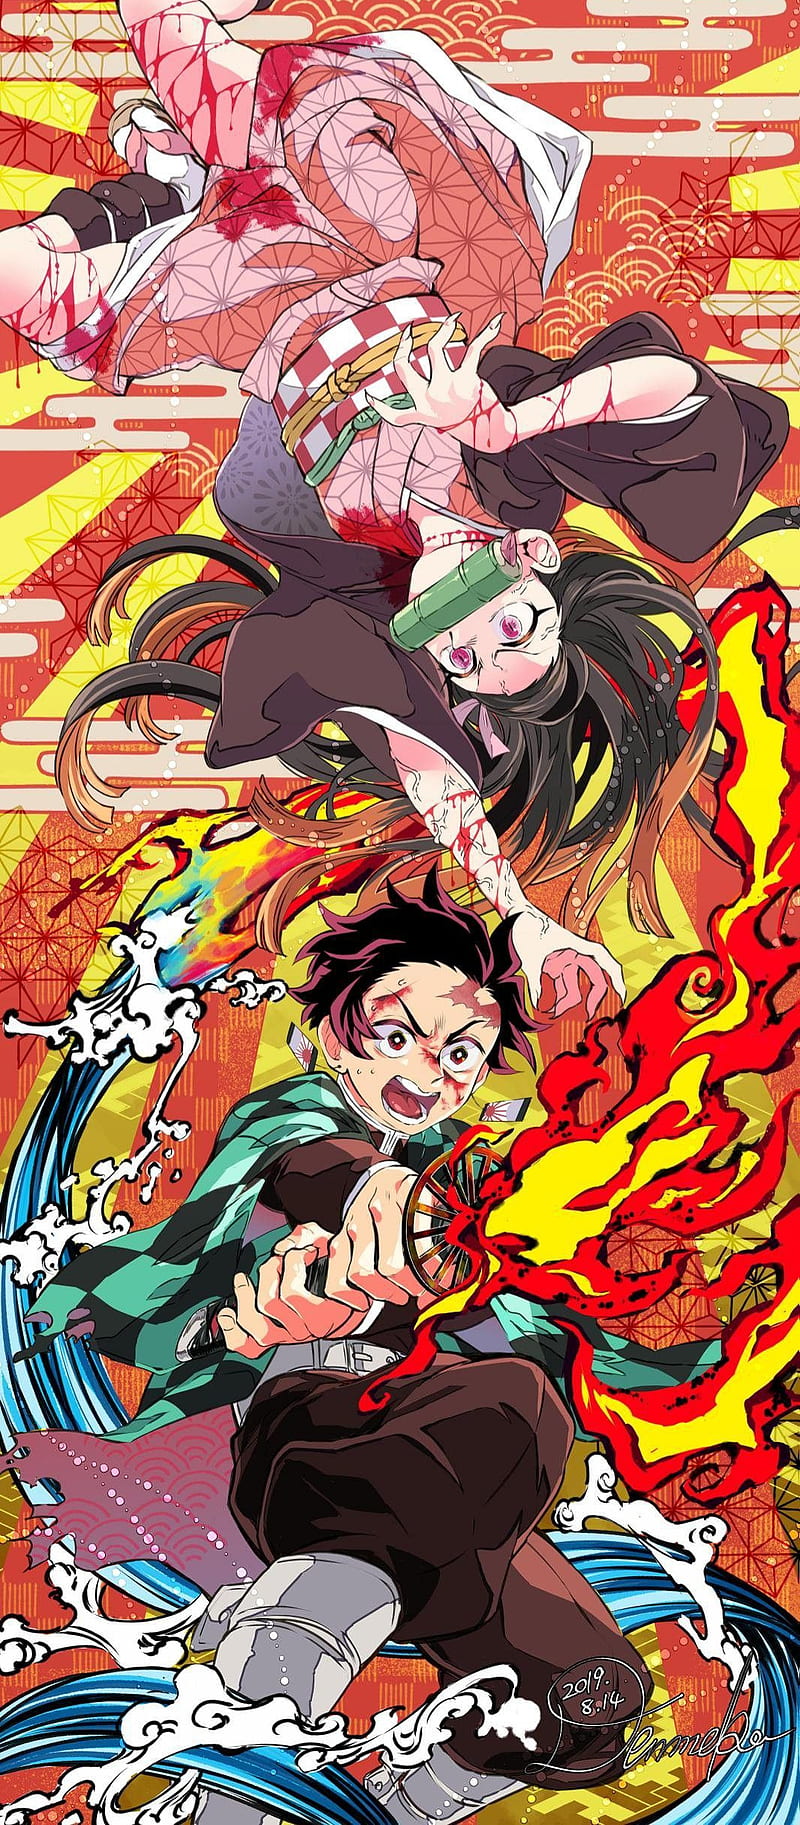 Anime Demon Slayer: Kimetsu no Yaiba 4k Ultra HD Wallpaper by DT501061 余佳軒